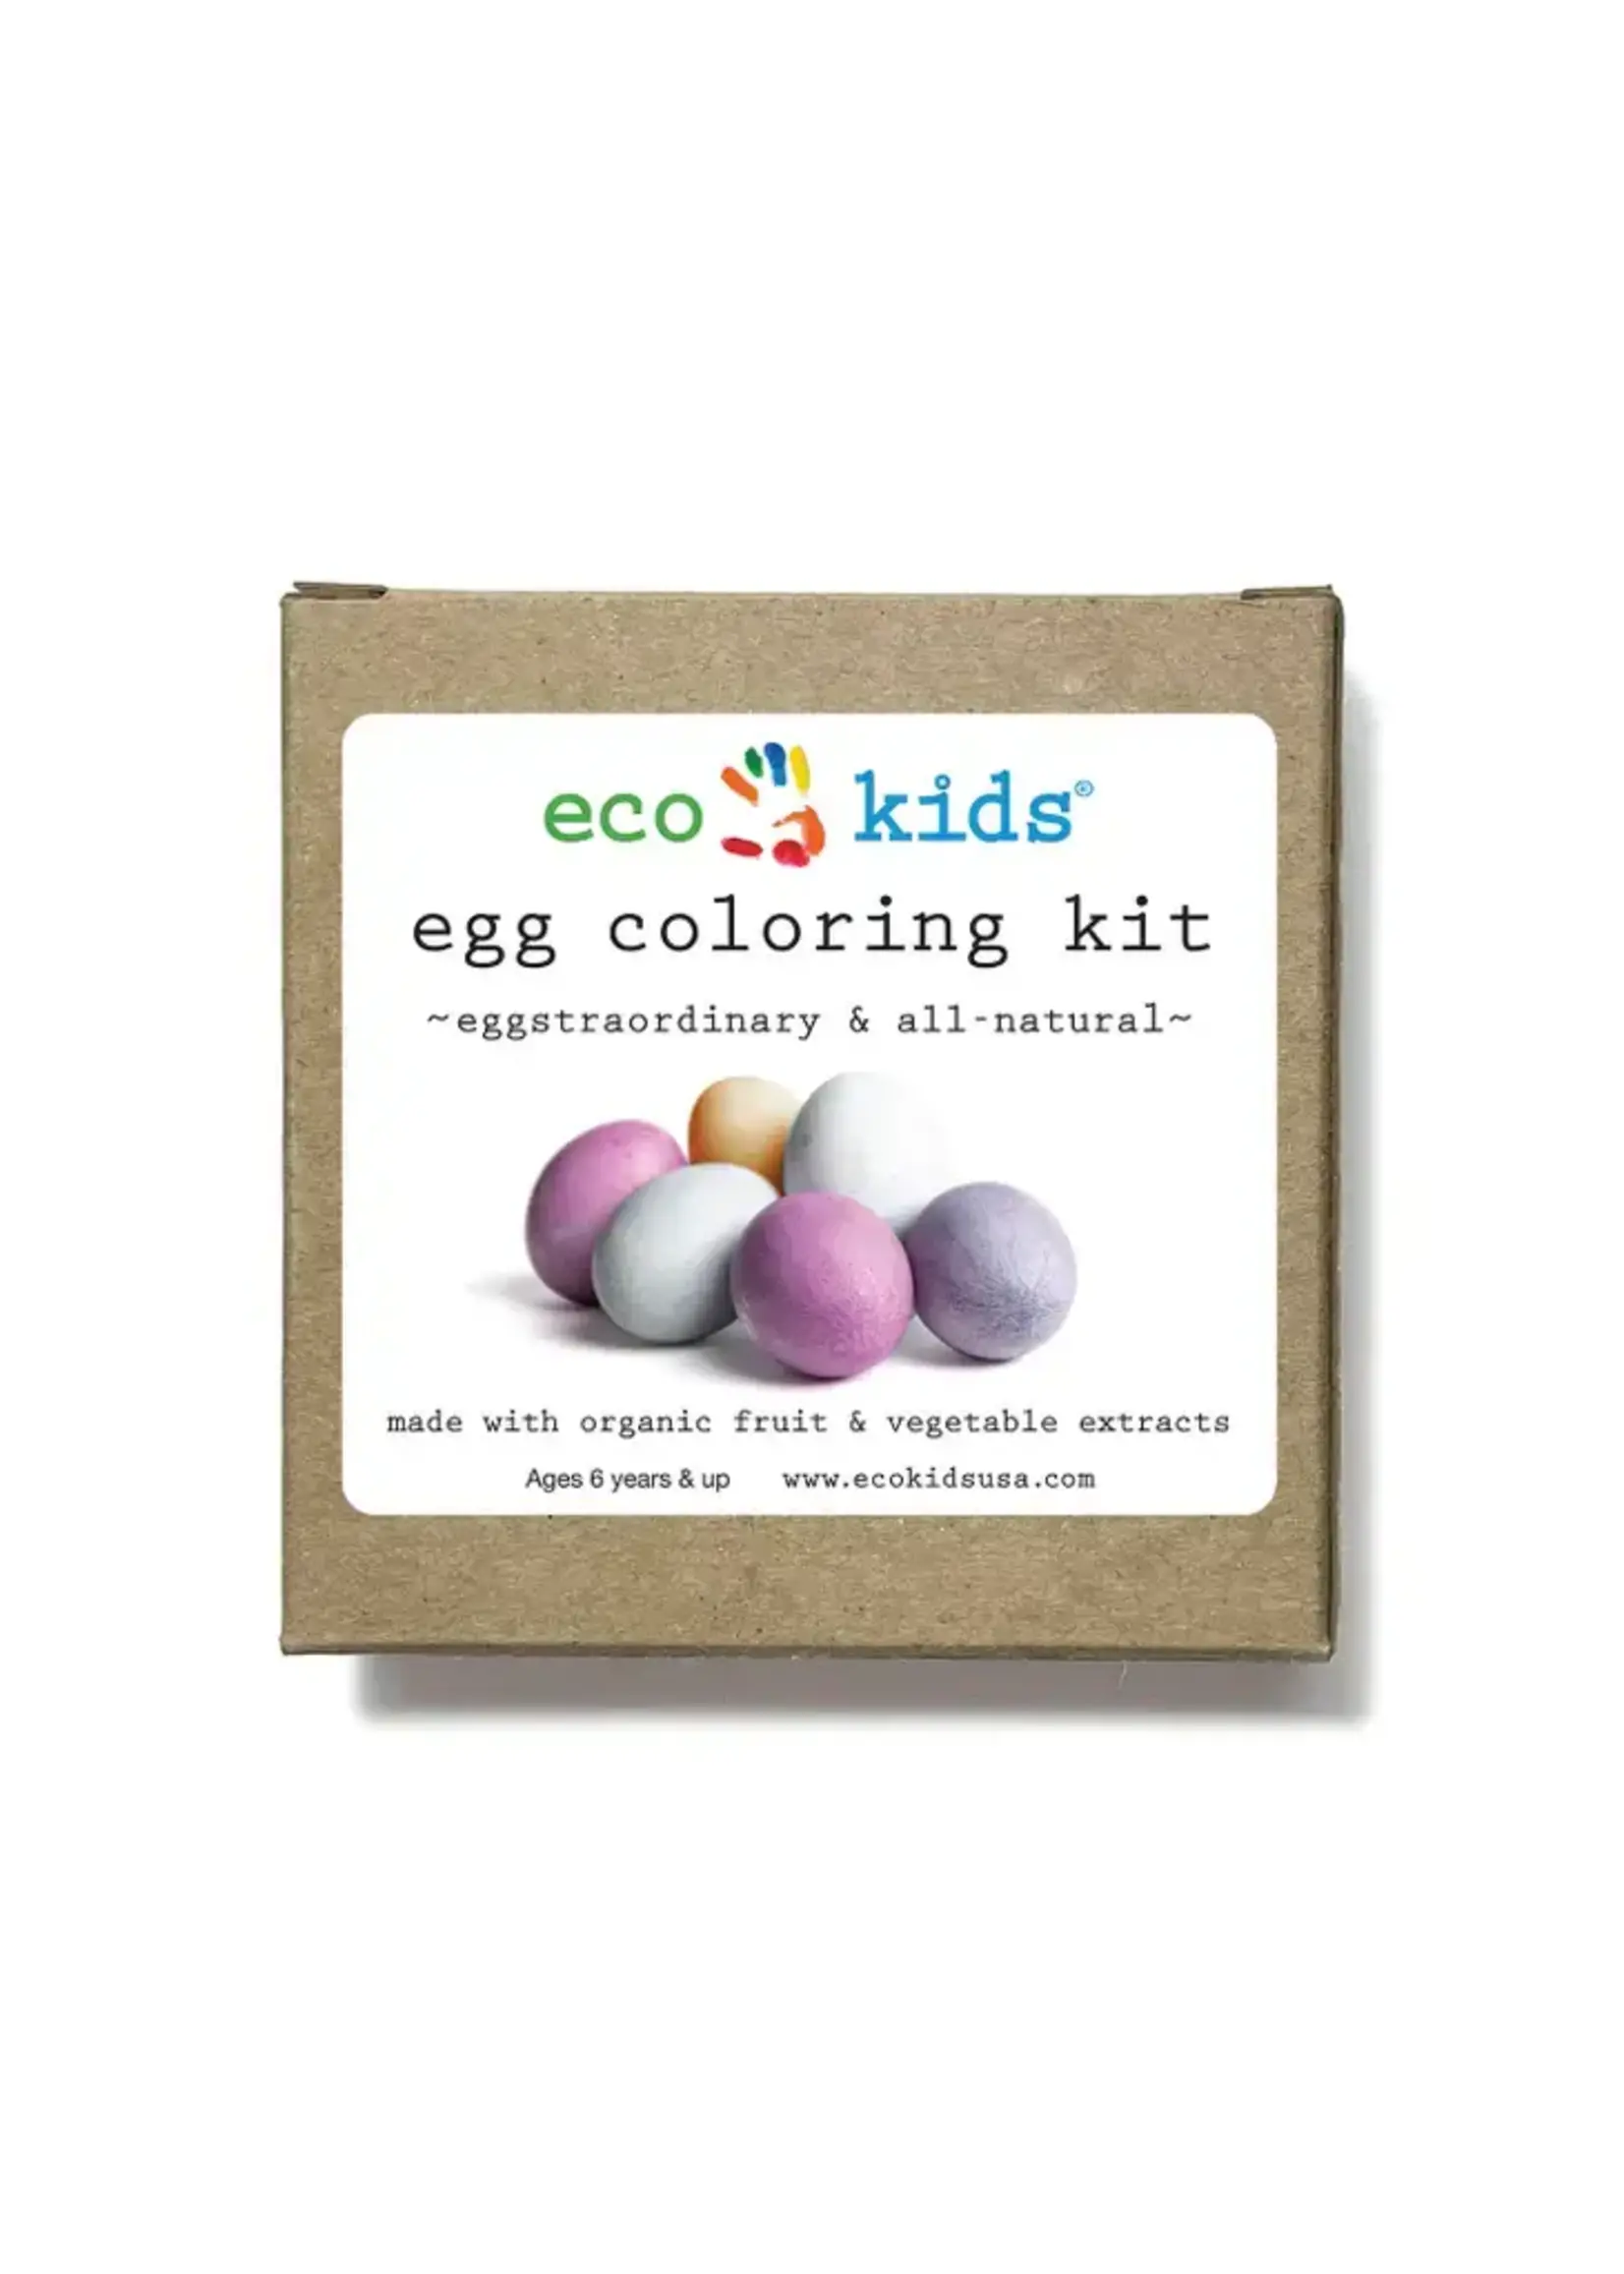 Eco-Kids egg coloring kit - case